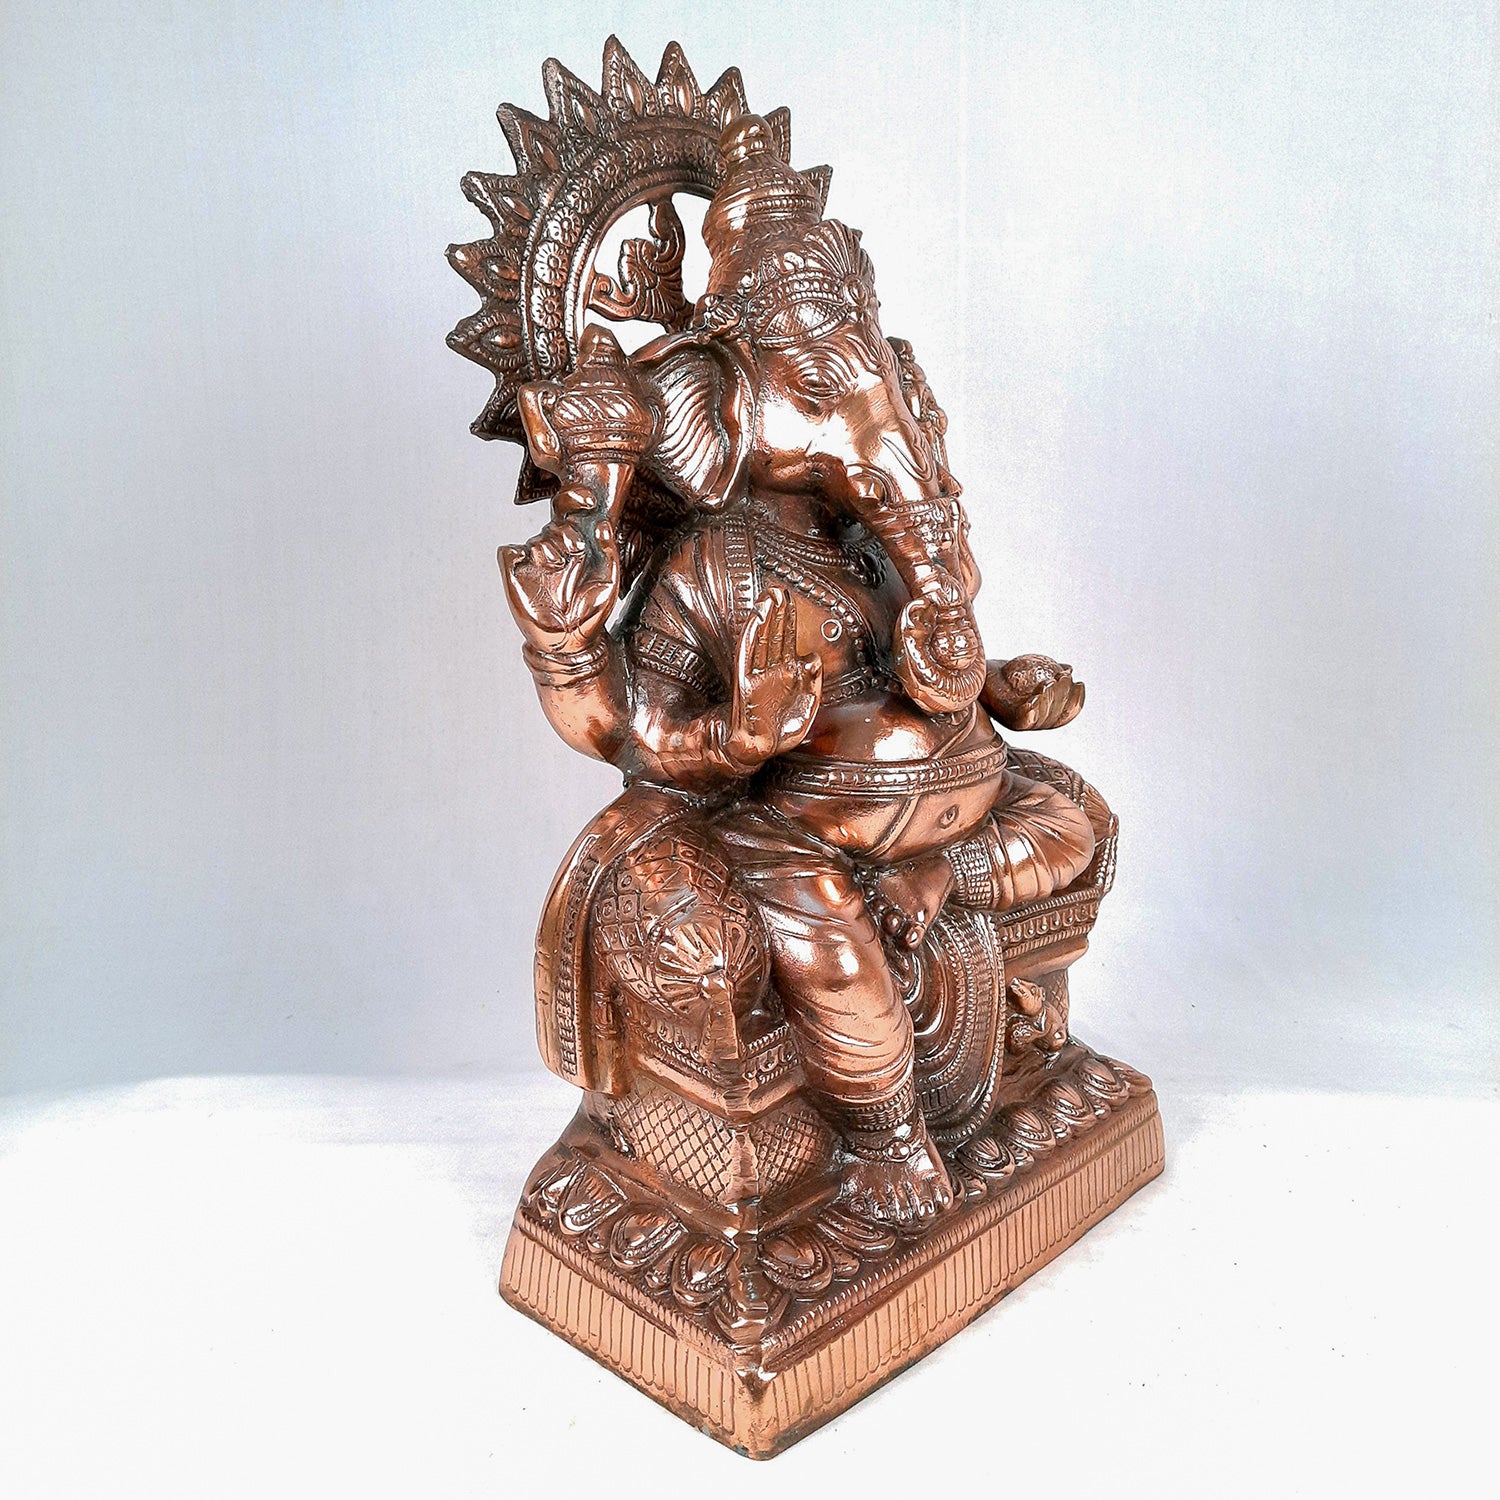 Lord Ganesha Statue | Ganesh Idol | Ganpati Murti - For Puja, Home, Office Decor & Gifts - 22 Inch- apkamart